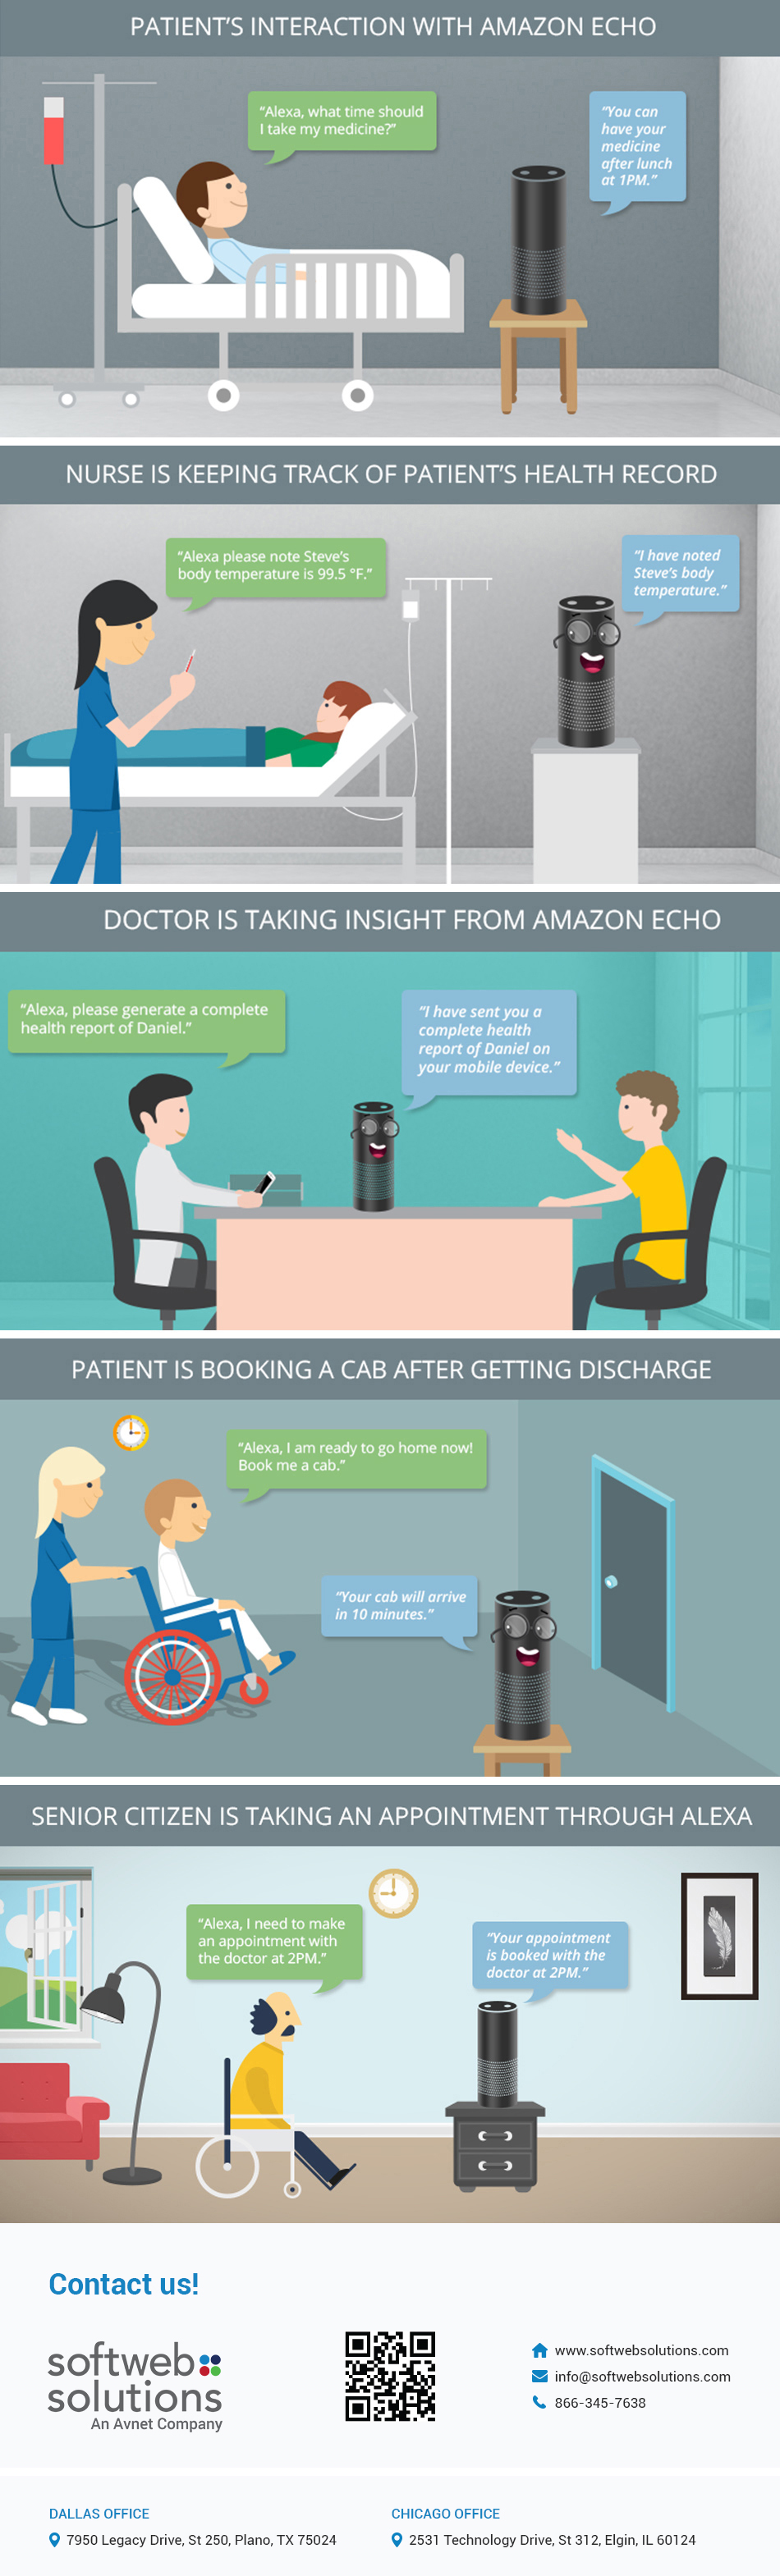 Amazon Echo for Healthcare